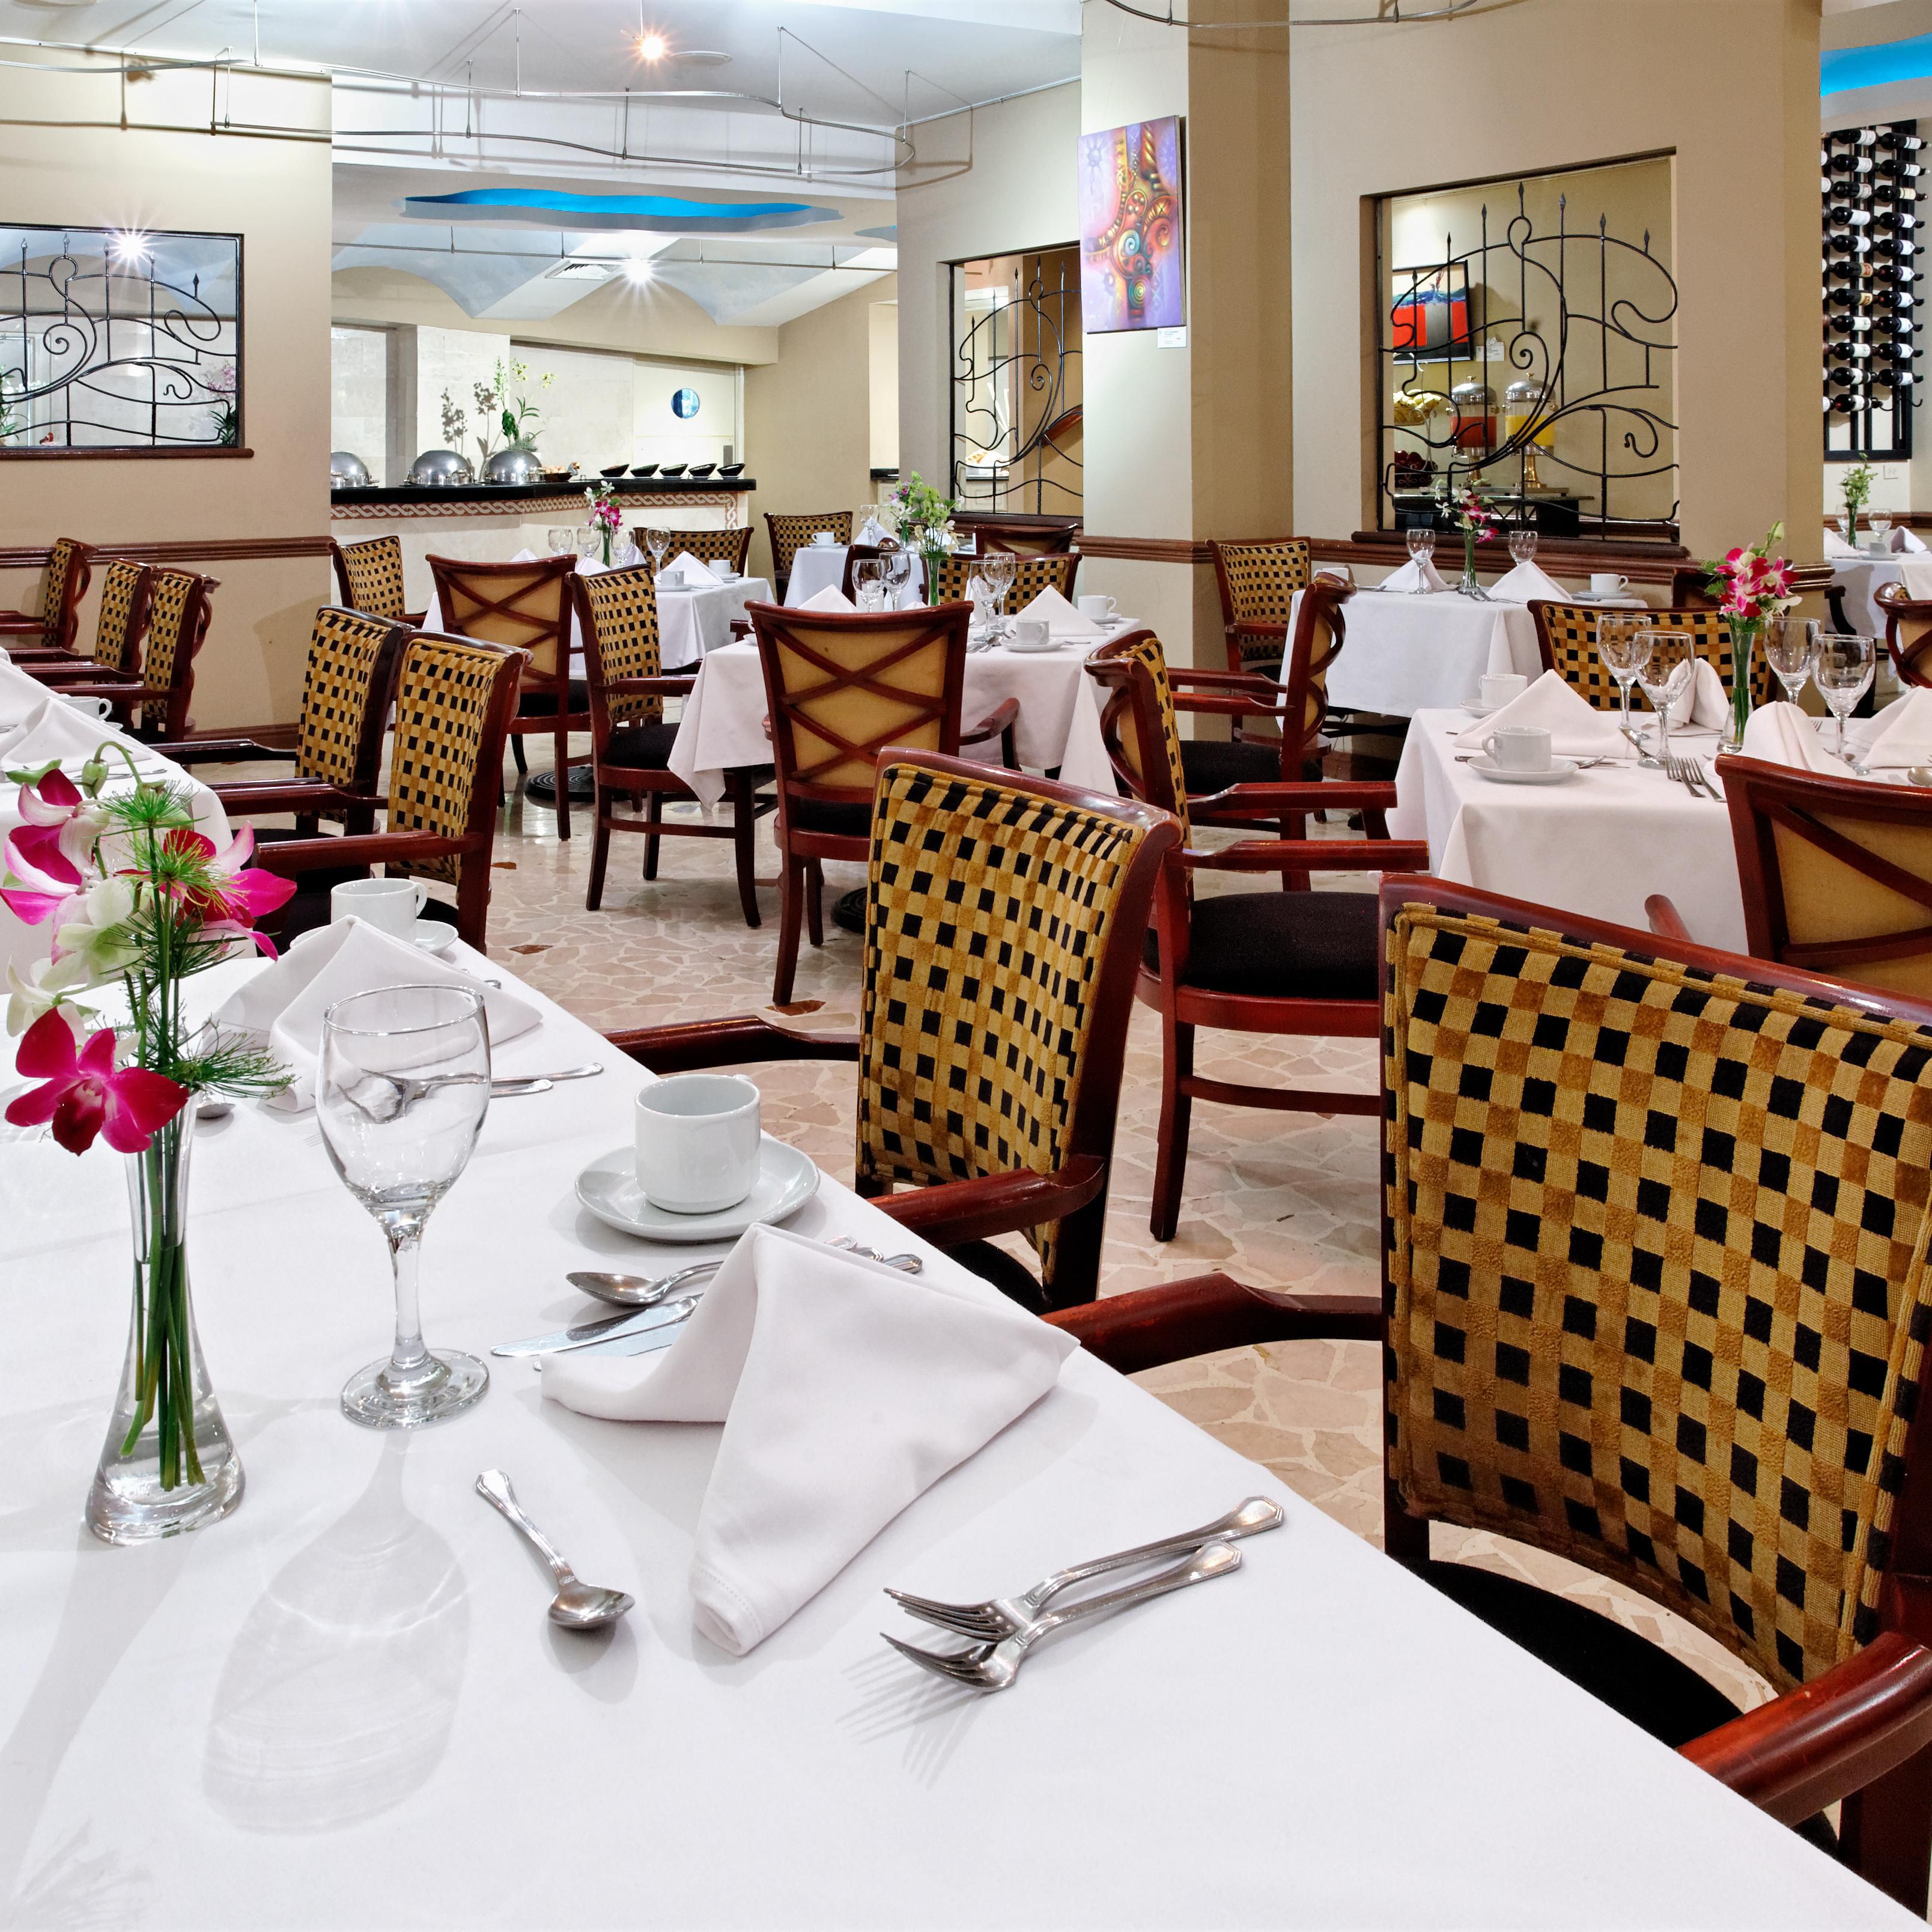 Restaurant La Galeria at the Crowne Plaza Panama